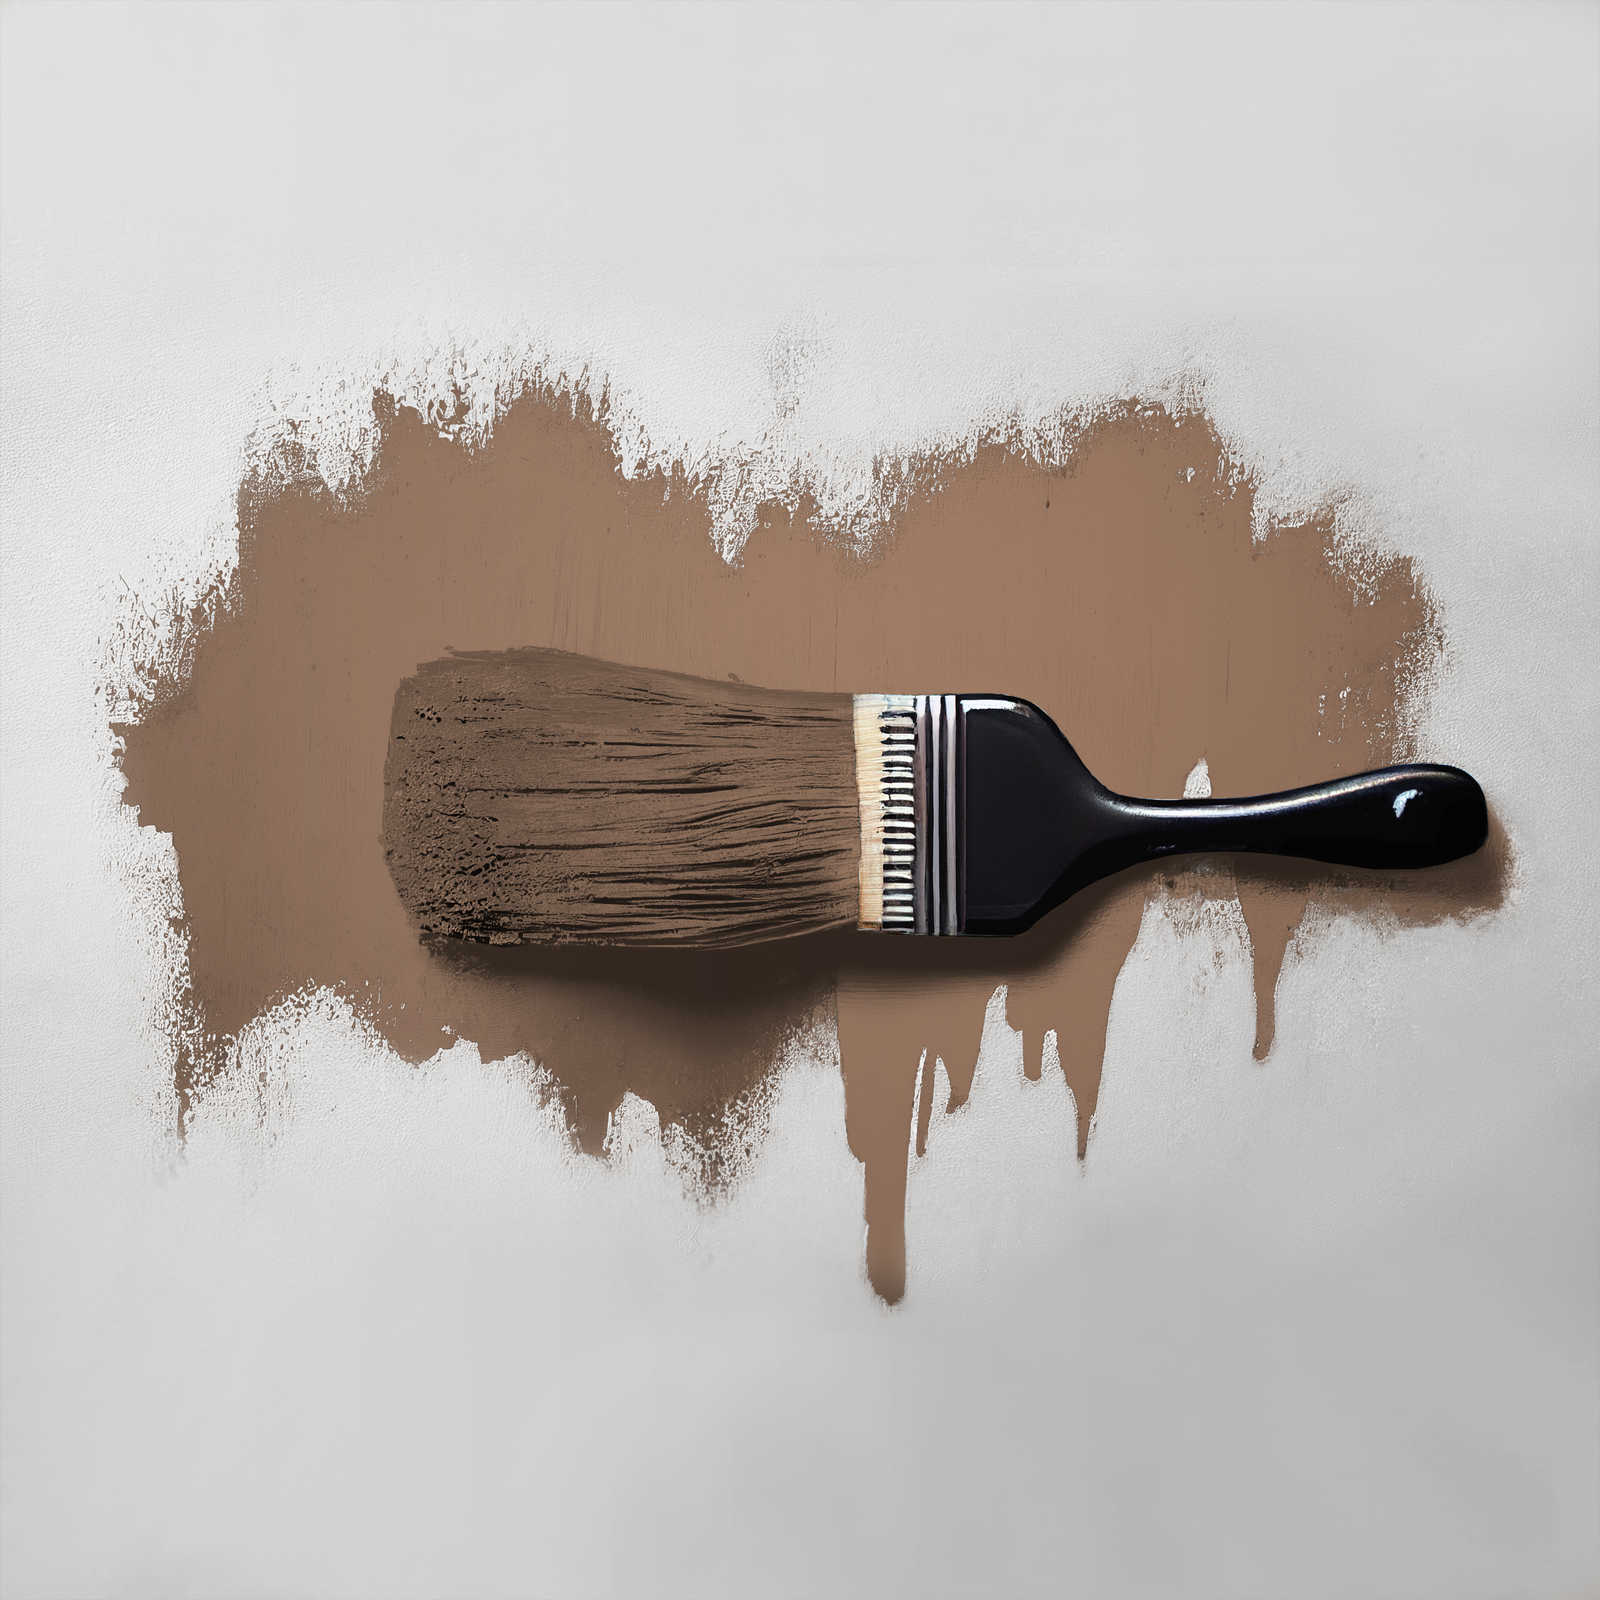             Peinture murale TCK6013 »Rosy Rosine« en brun doré naturel – 5,0 litres
        